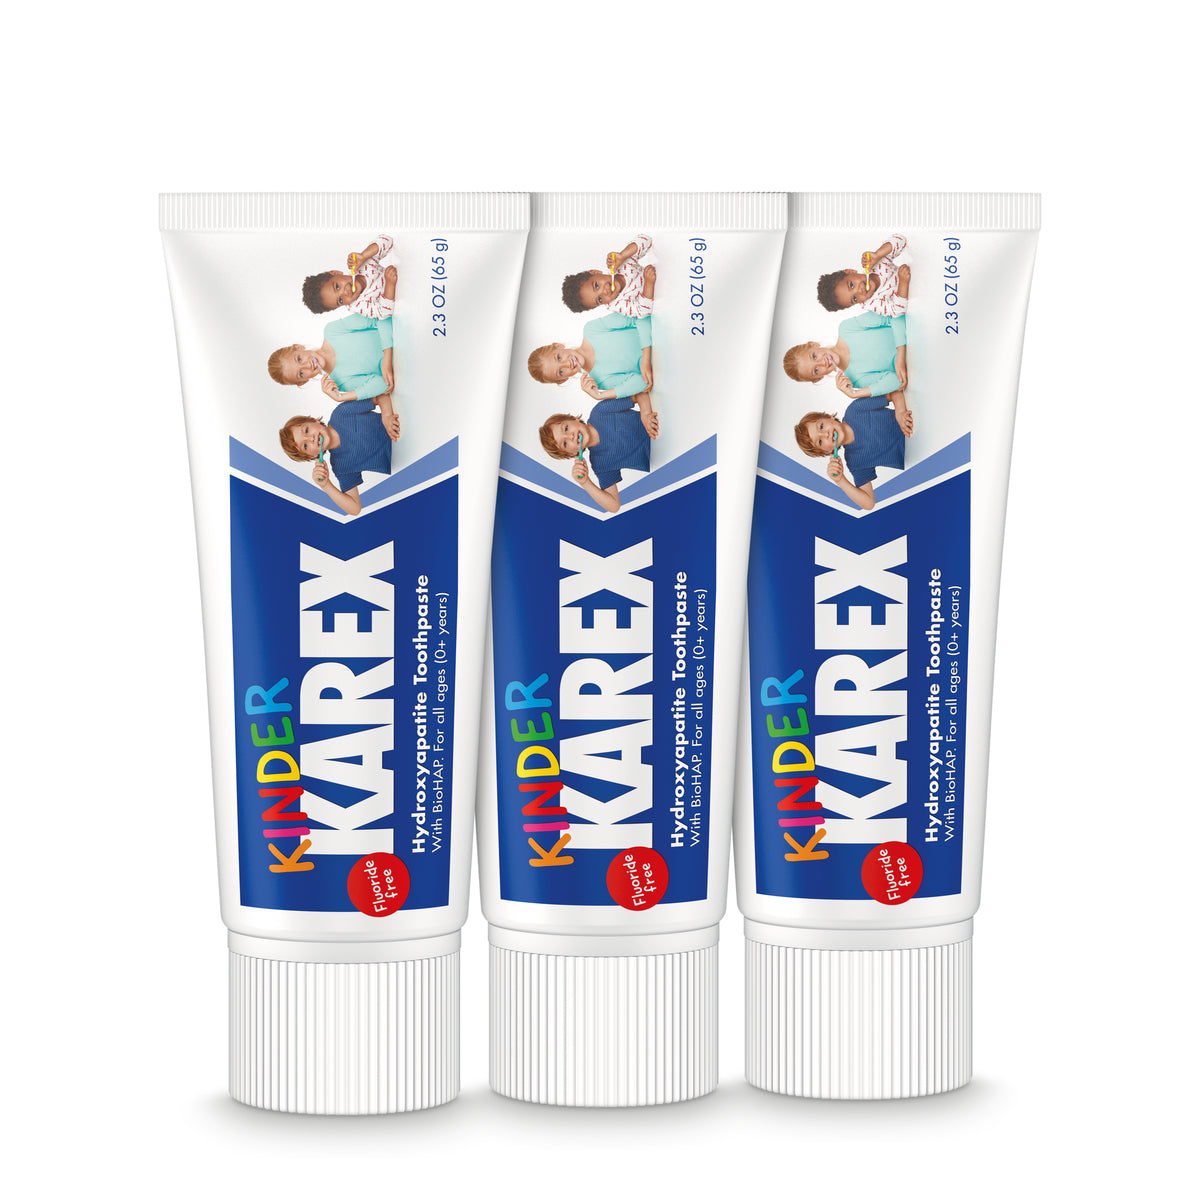 Kinder Karex Hydroxyapatite Toothpaste KAREX USA